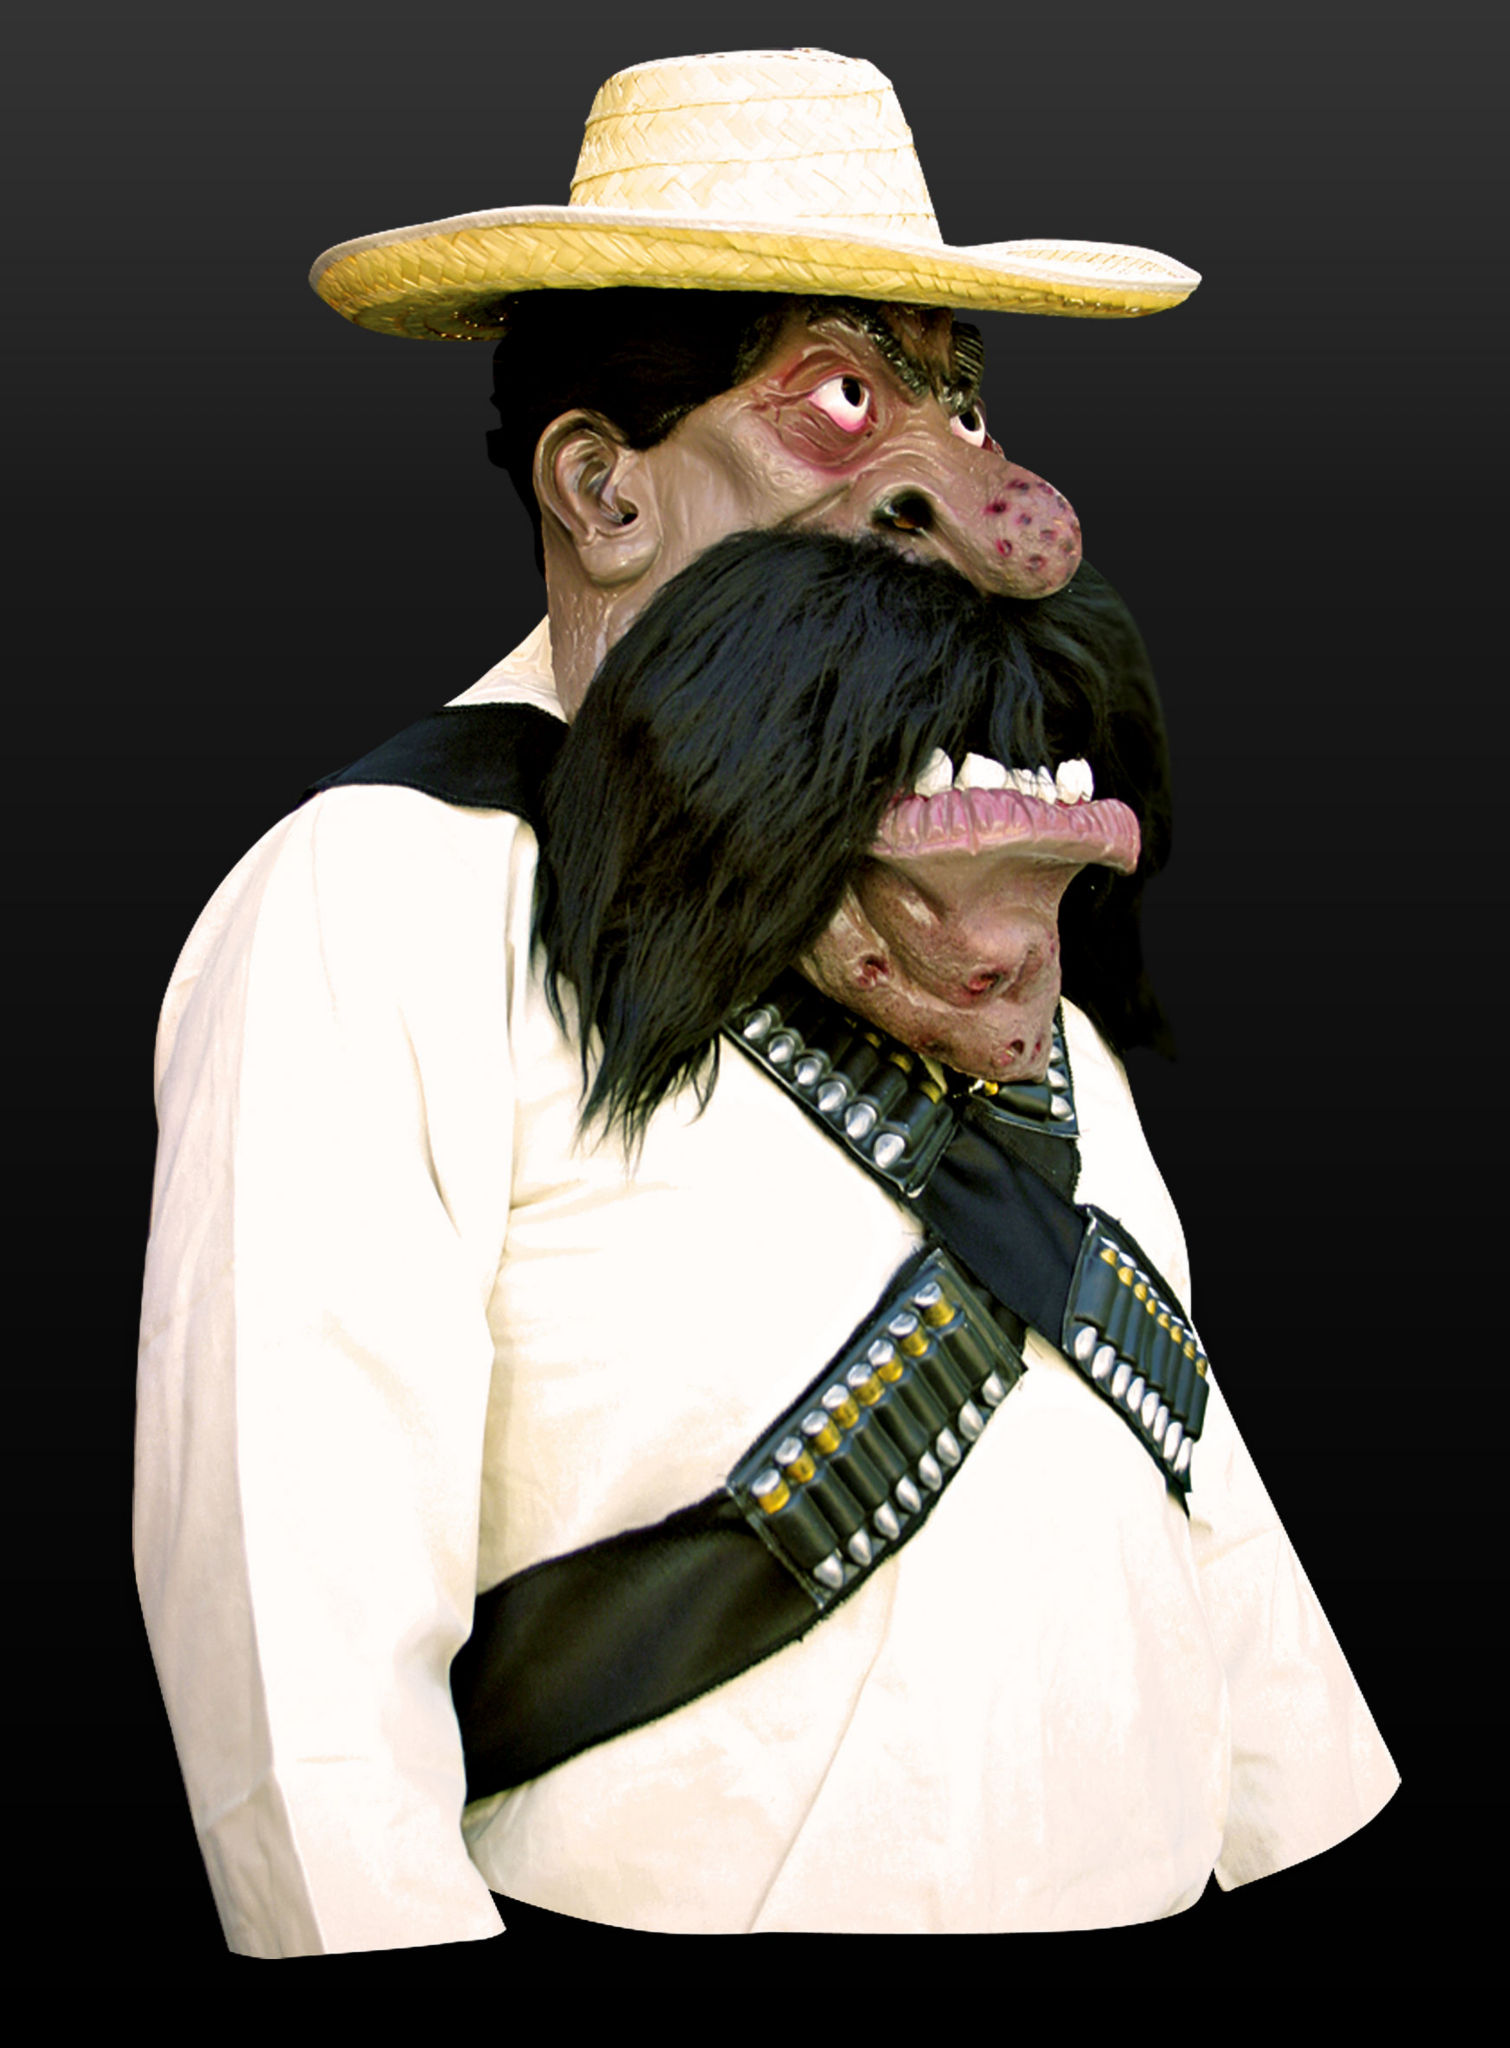 104125-mexikaner-kostuem-mexican-costume-zapata